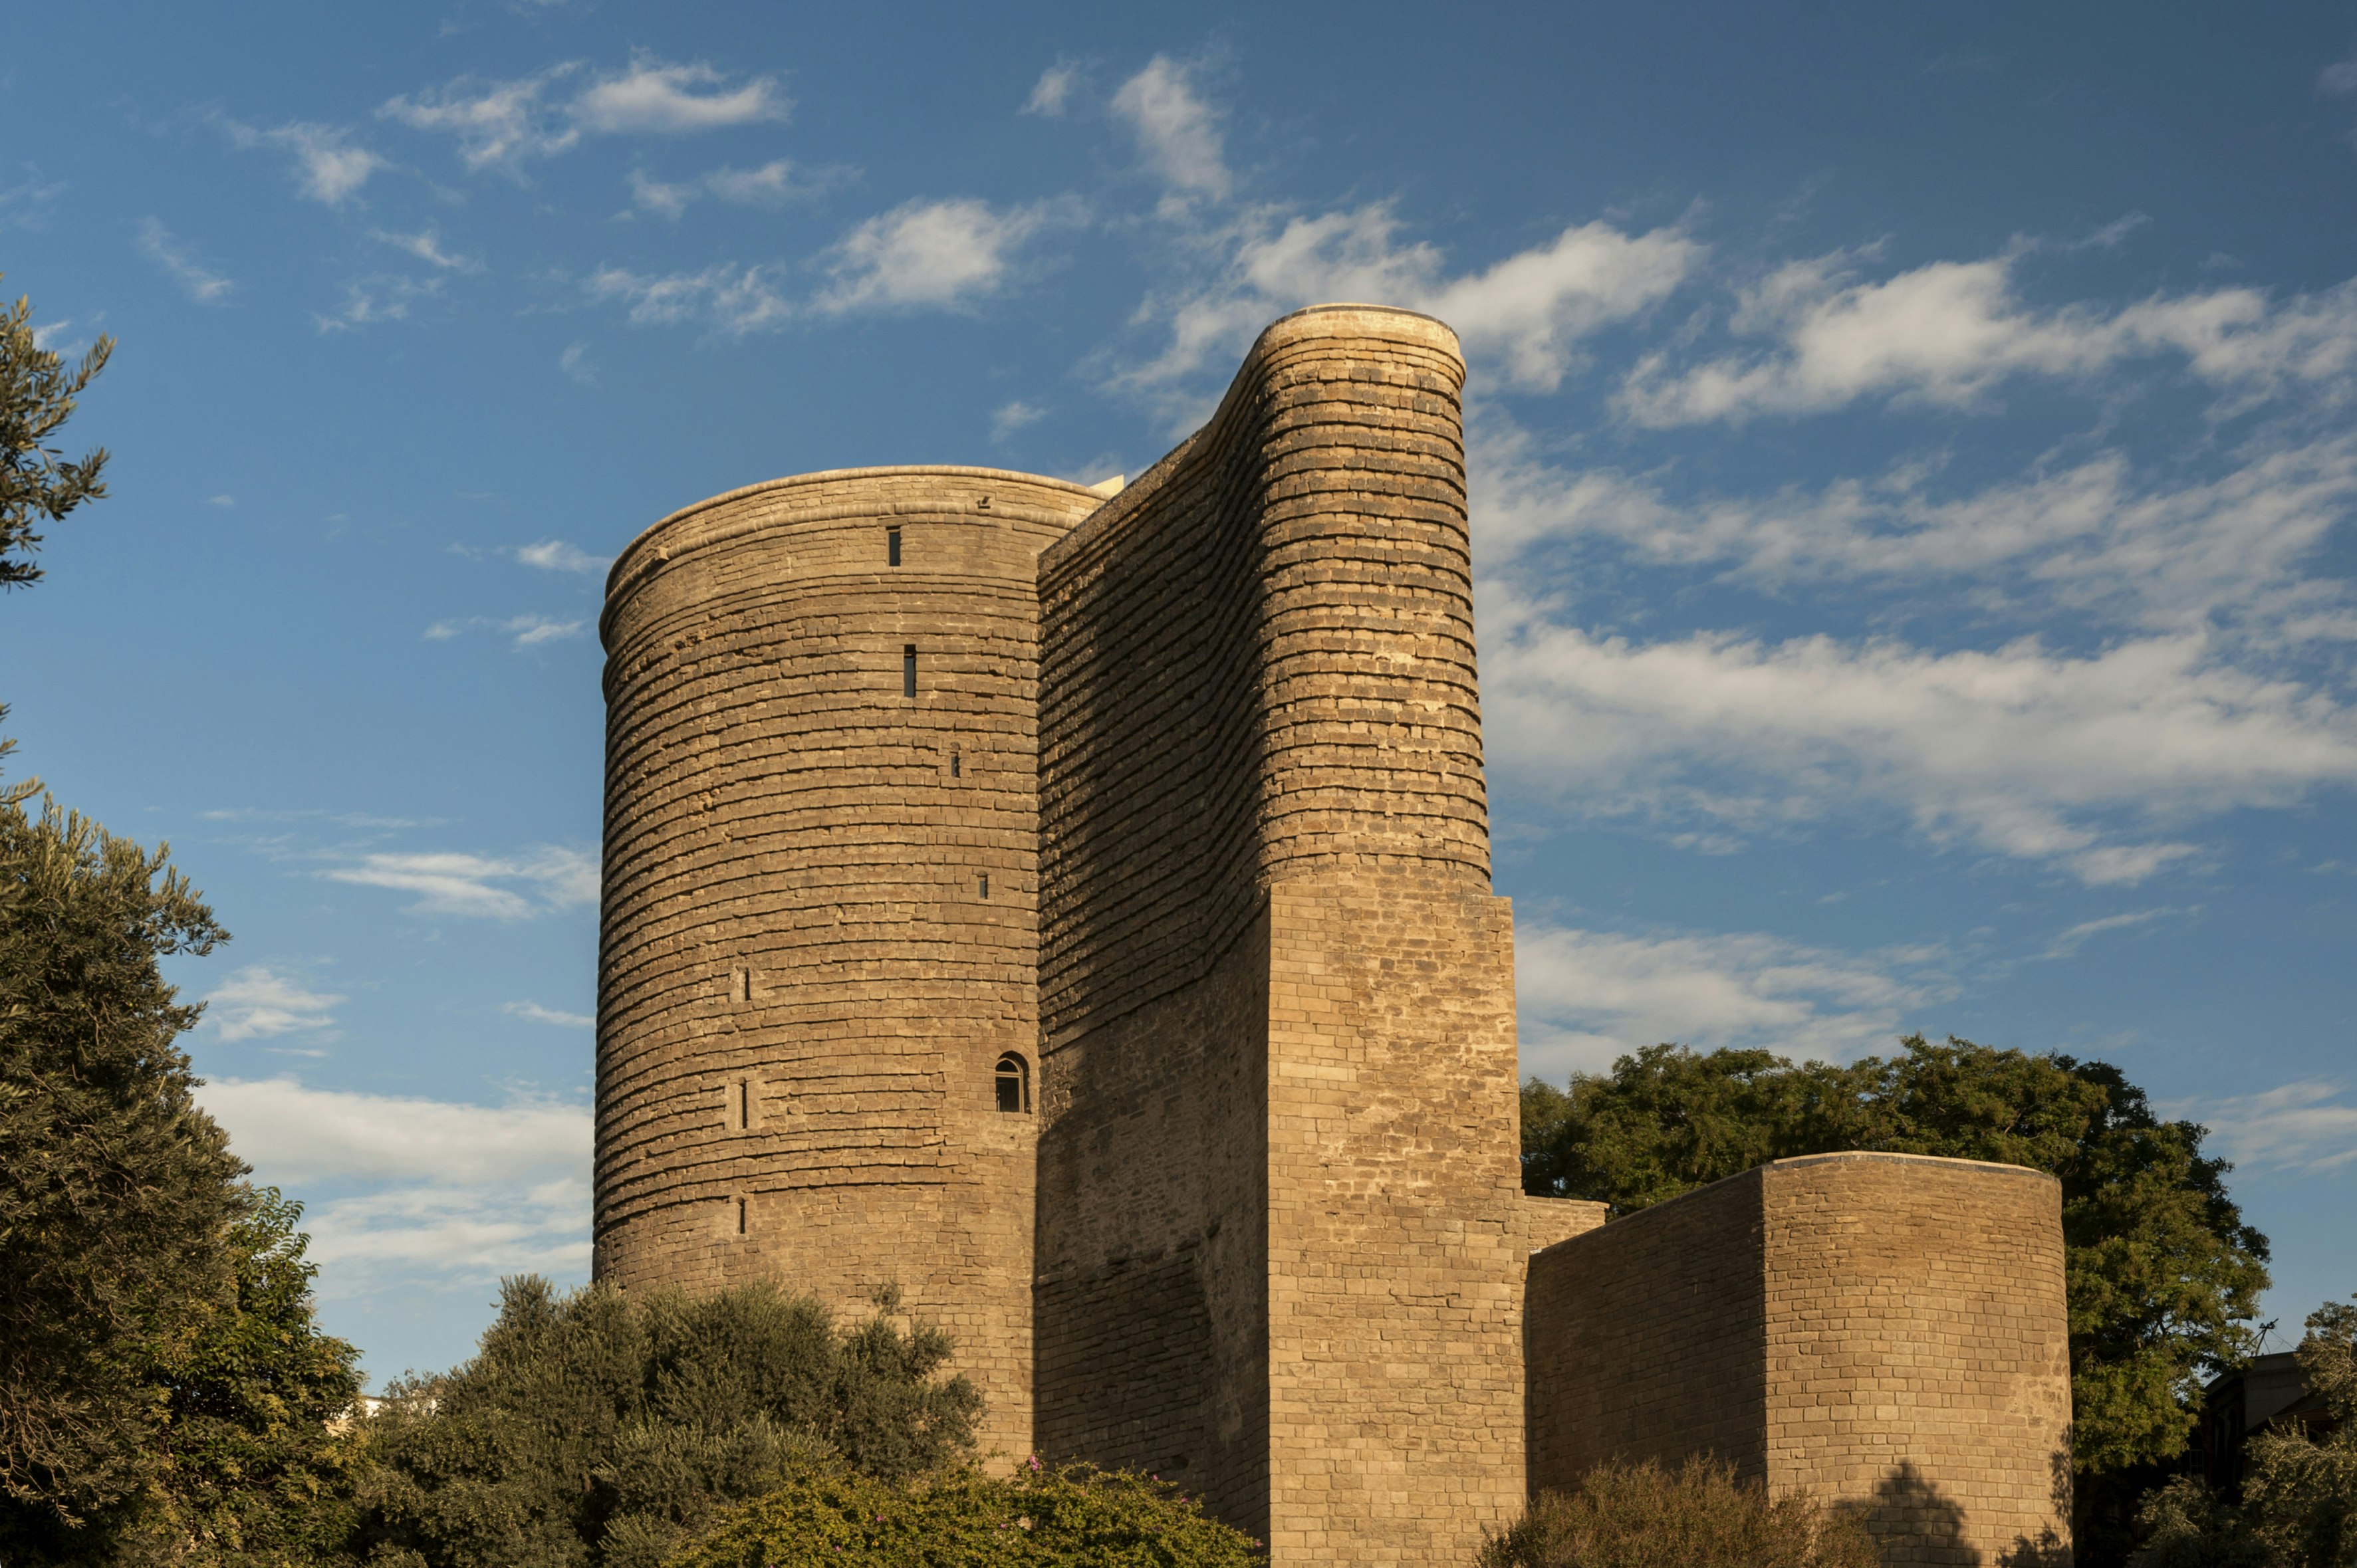 The Maiden Tower in Old Baku, Azerbaijan